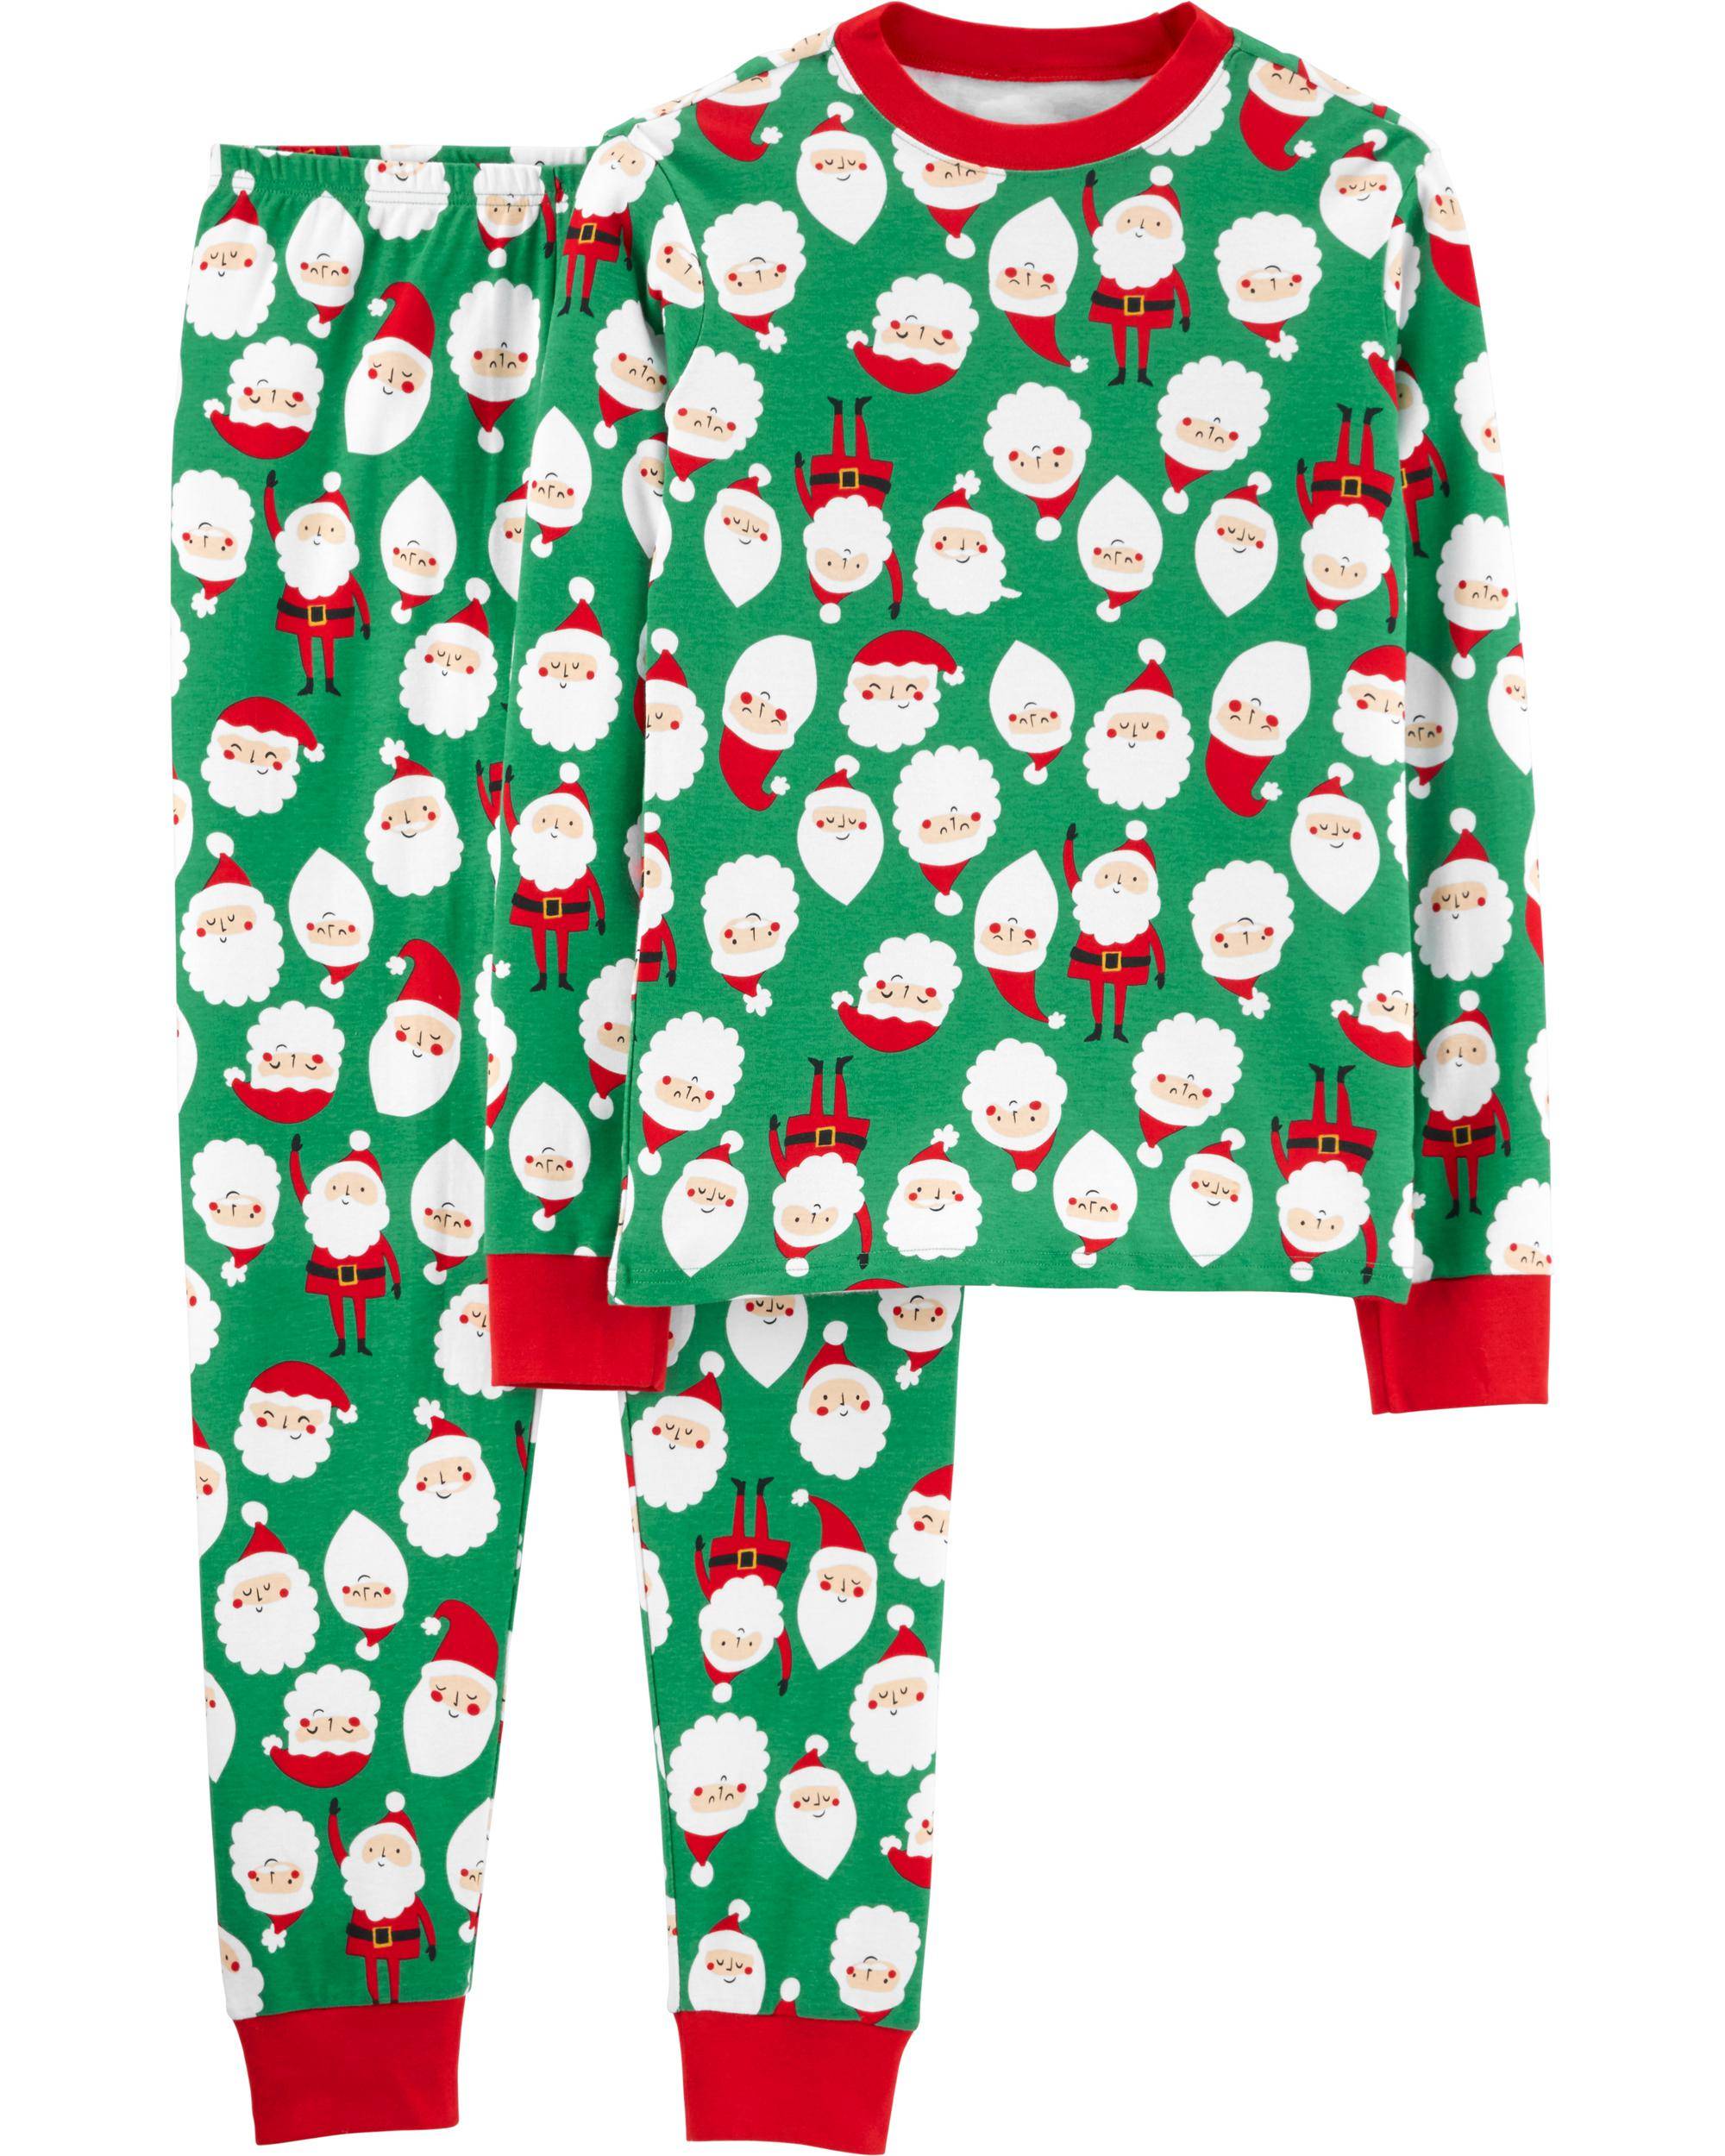  piece adult christmas. Pajamas clipart cotton clothing